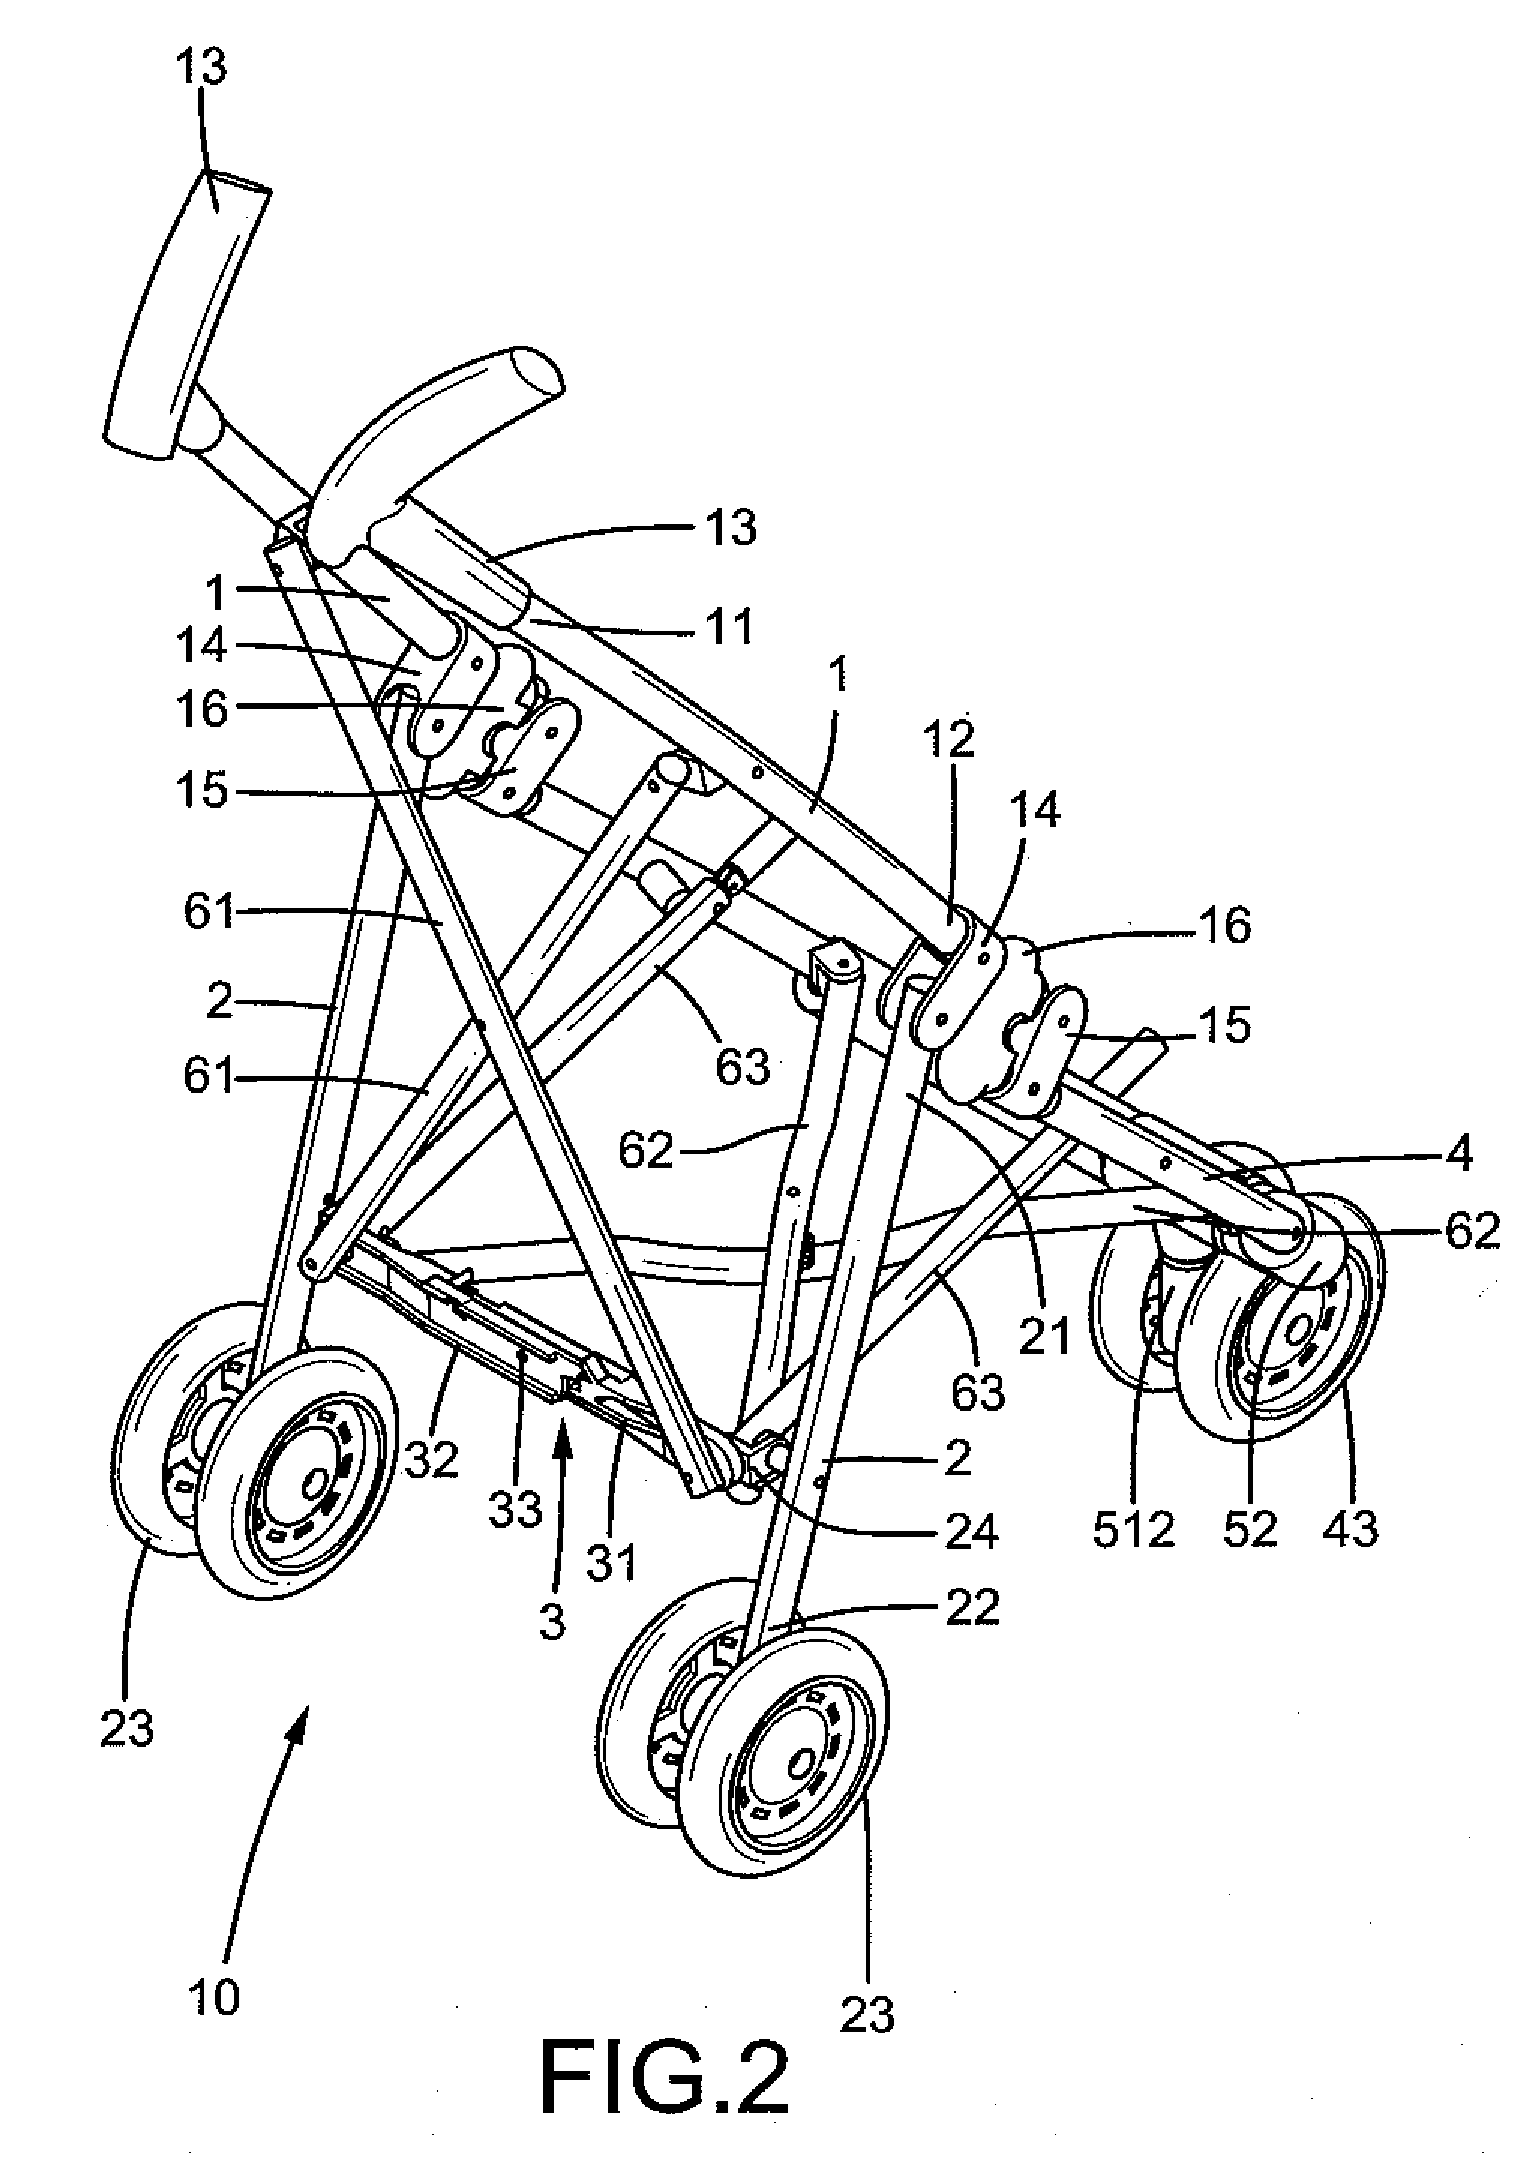 Foldable Three-Wheel Stroller